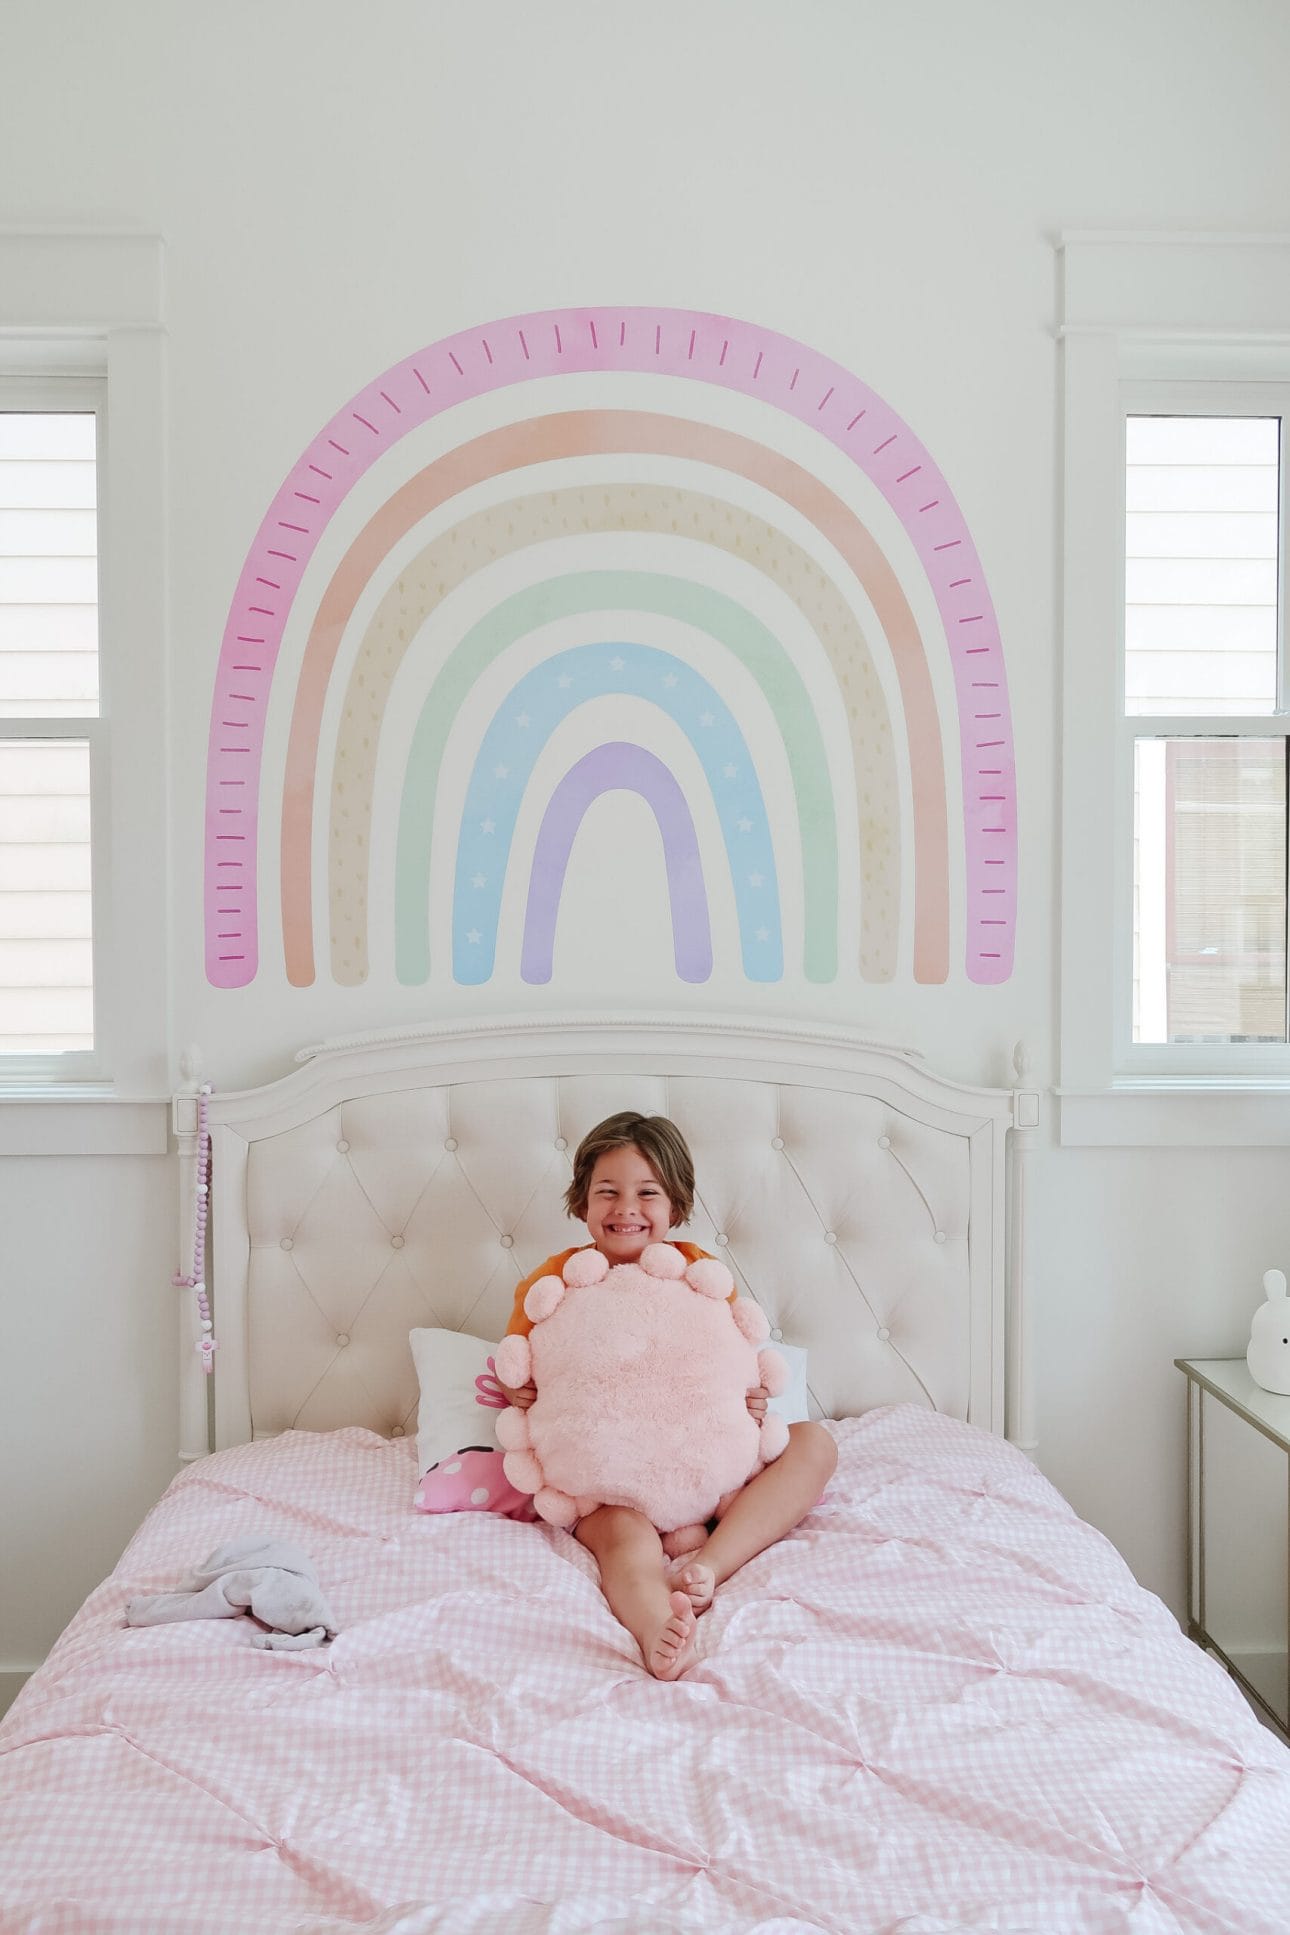 Jordan Bedroom, Rainbow Decal 